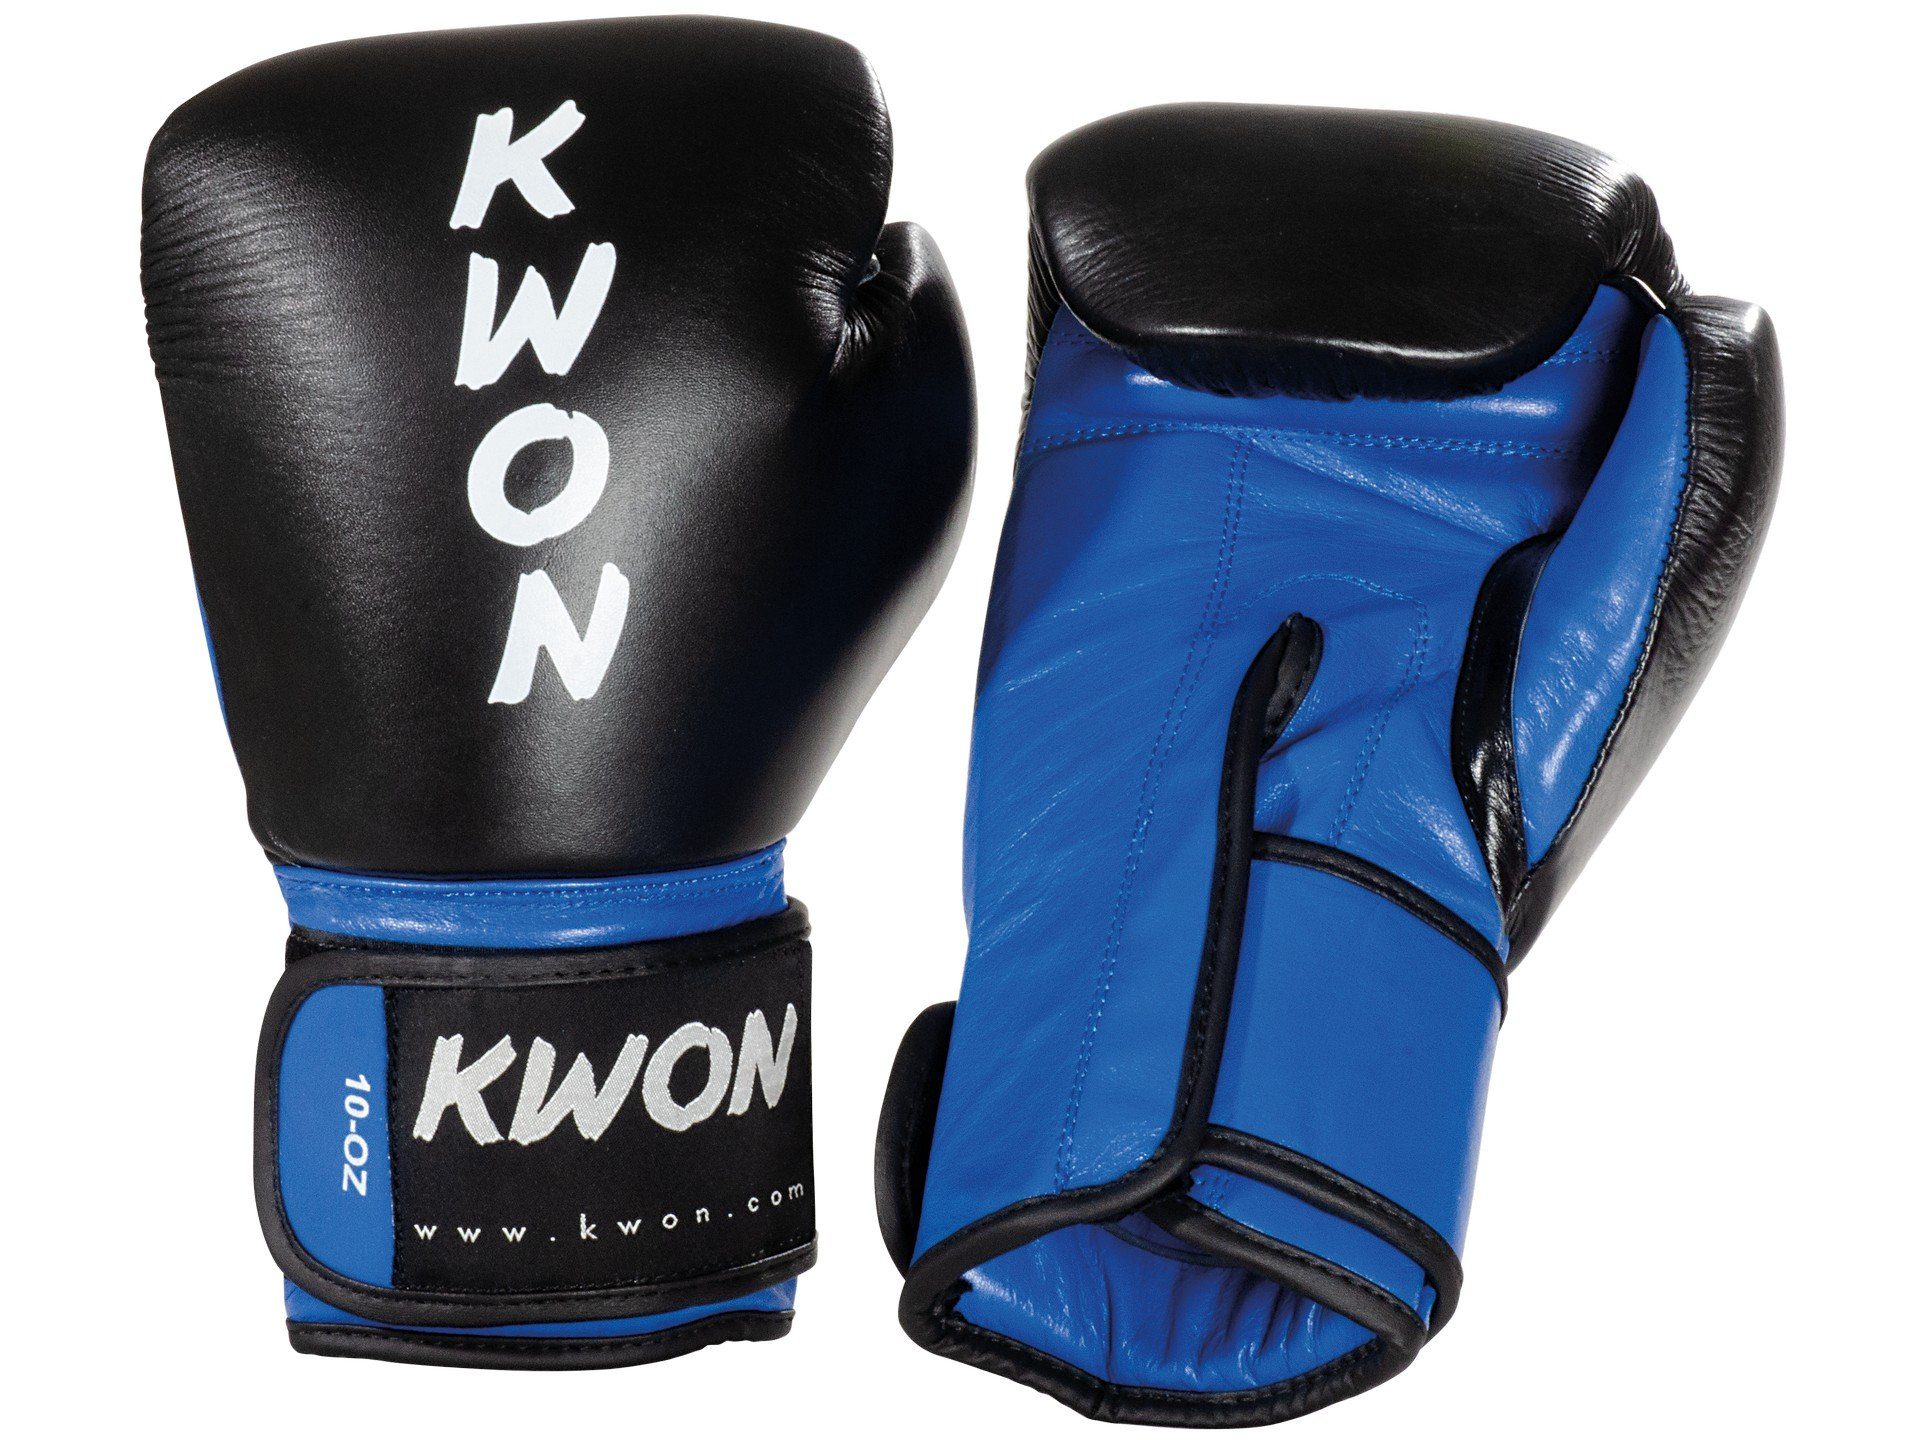 anerkannt KWON Echtes schwarz/gelb Form, Profi KO Boxen Profi Box-Handschuhe Leder Thaiboxen Paar), Champ Ergo Kickboxen (Vollkontakt, Ausführung, Boxhandschuhe Leder, WKU